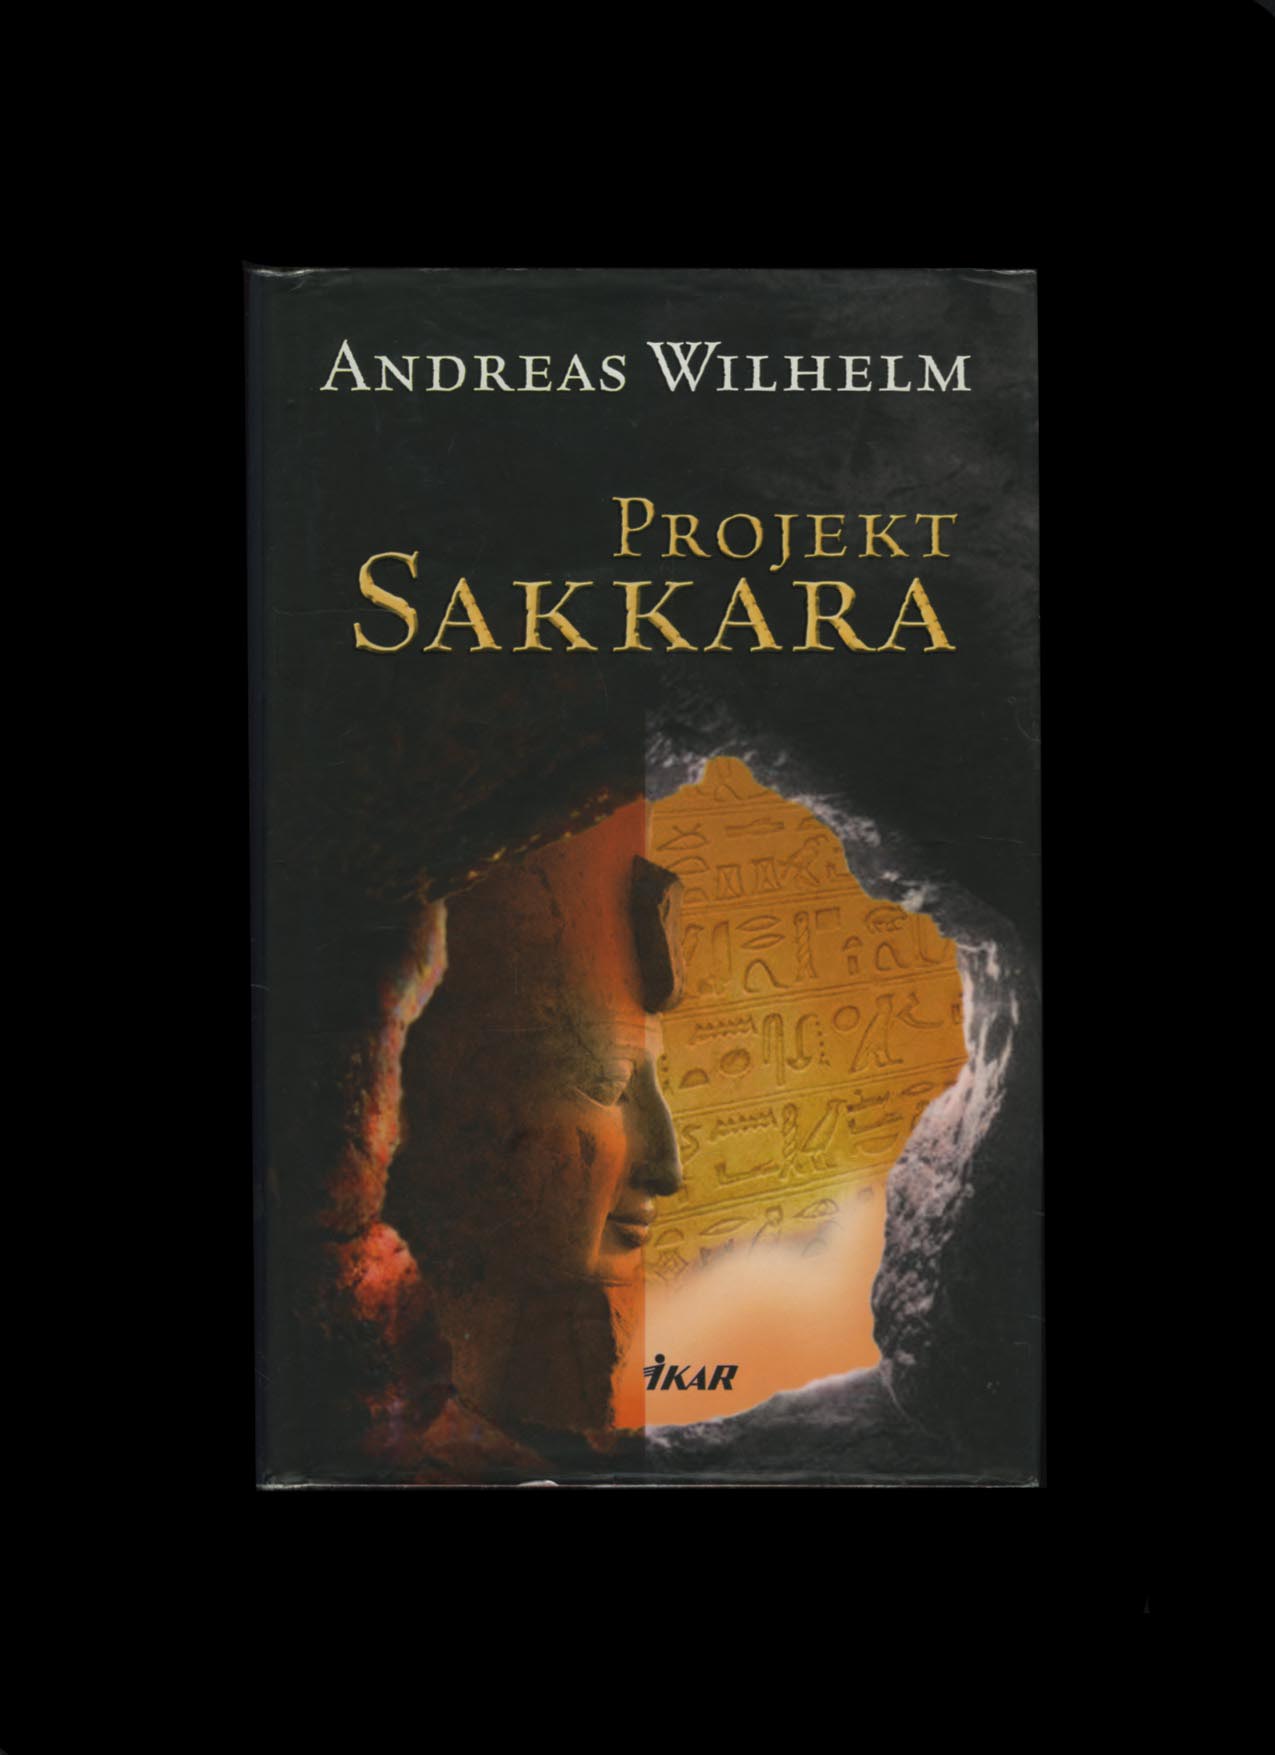 Projekt Sakkara (Andreas Wilhelm)